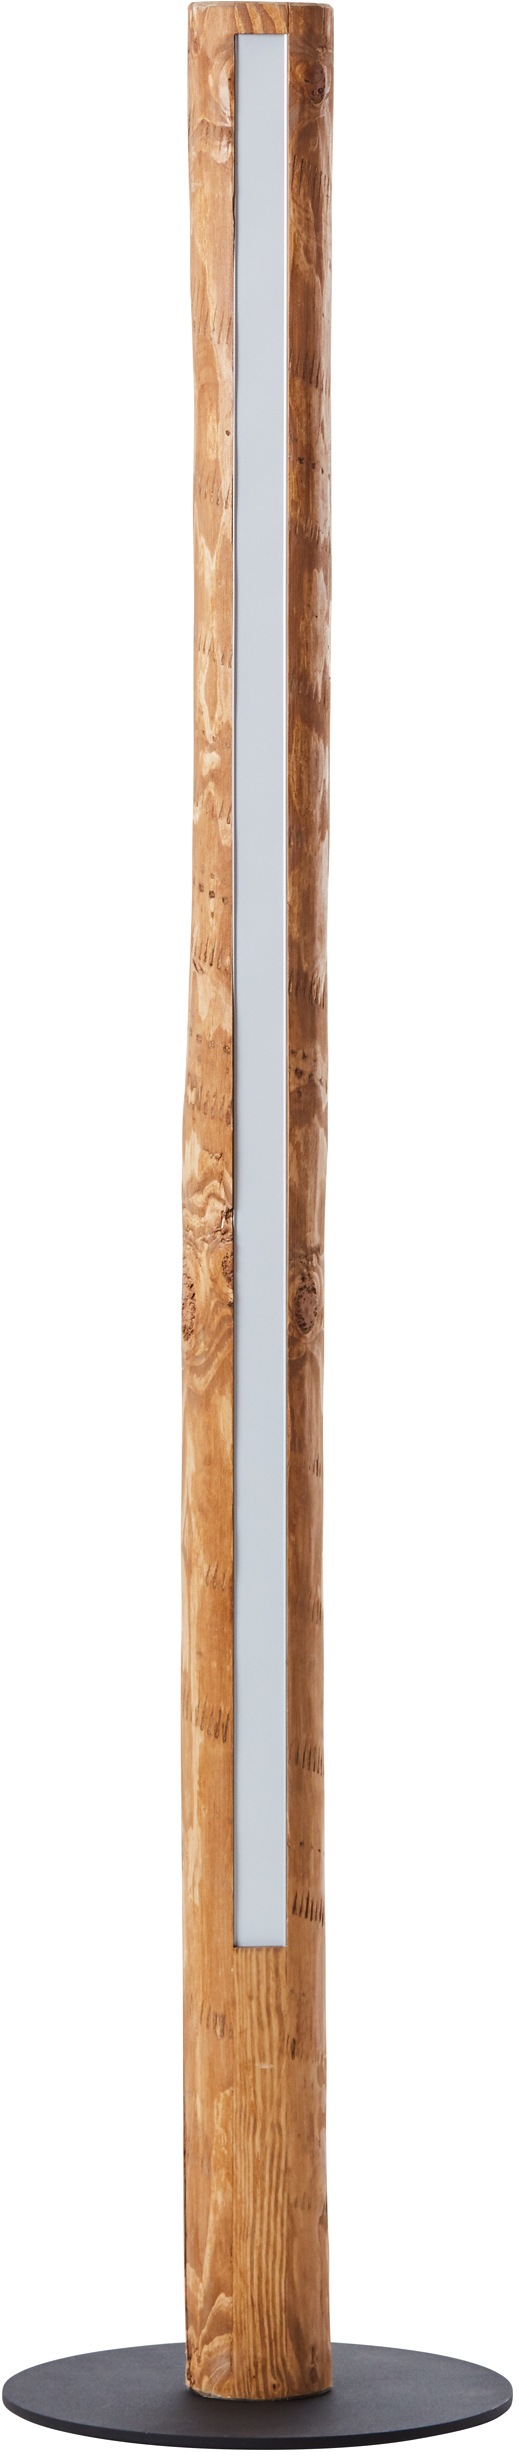 dimmbar, 2900 kiefer gebeizt lm, cm, H 141 Brilliant flammig-flammig, »Odun«, Stehlampe Holz/Metall, BAUR warmweiß, 1 | LED